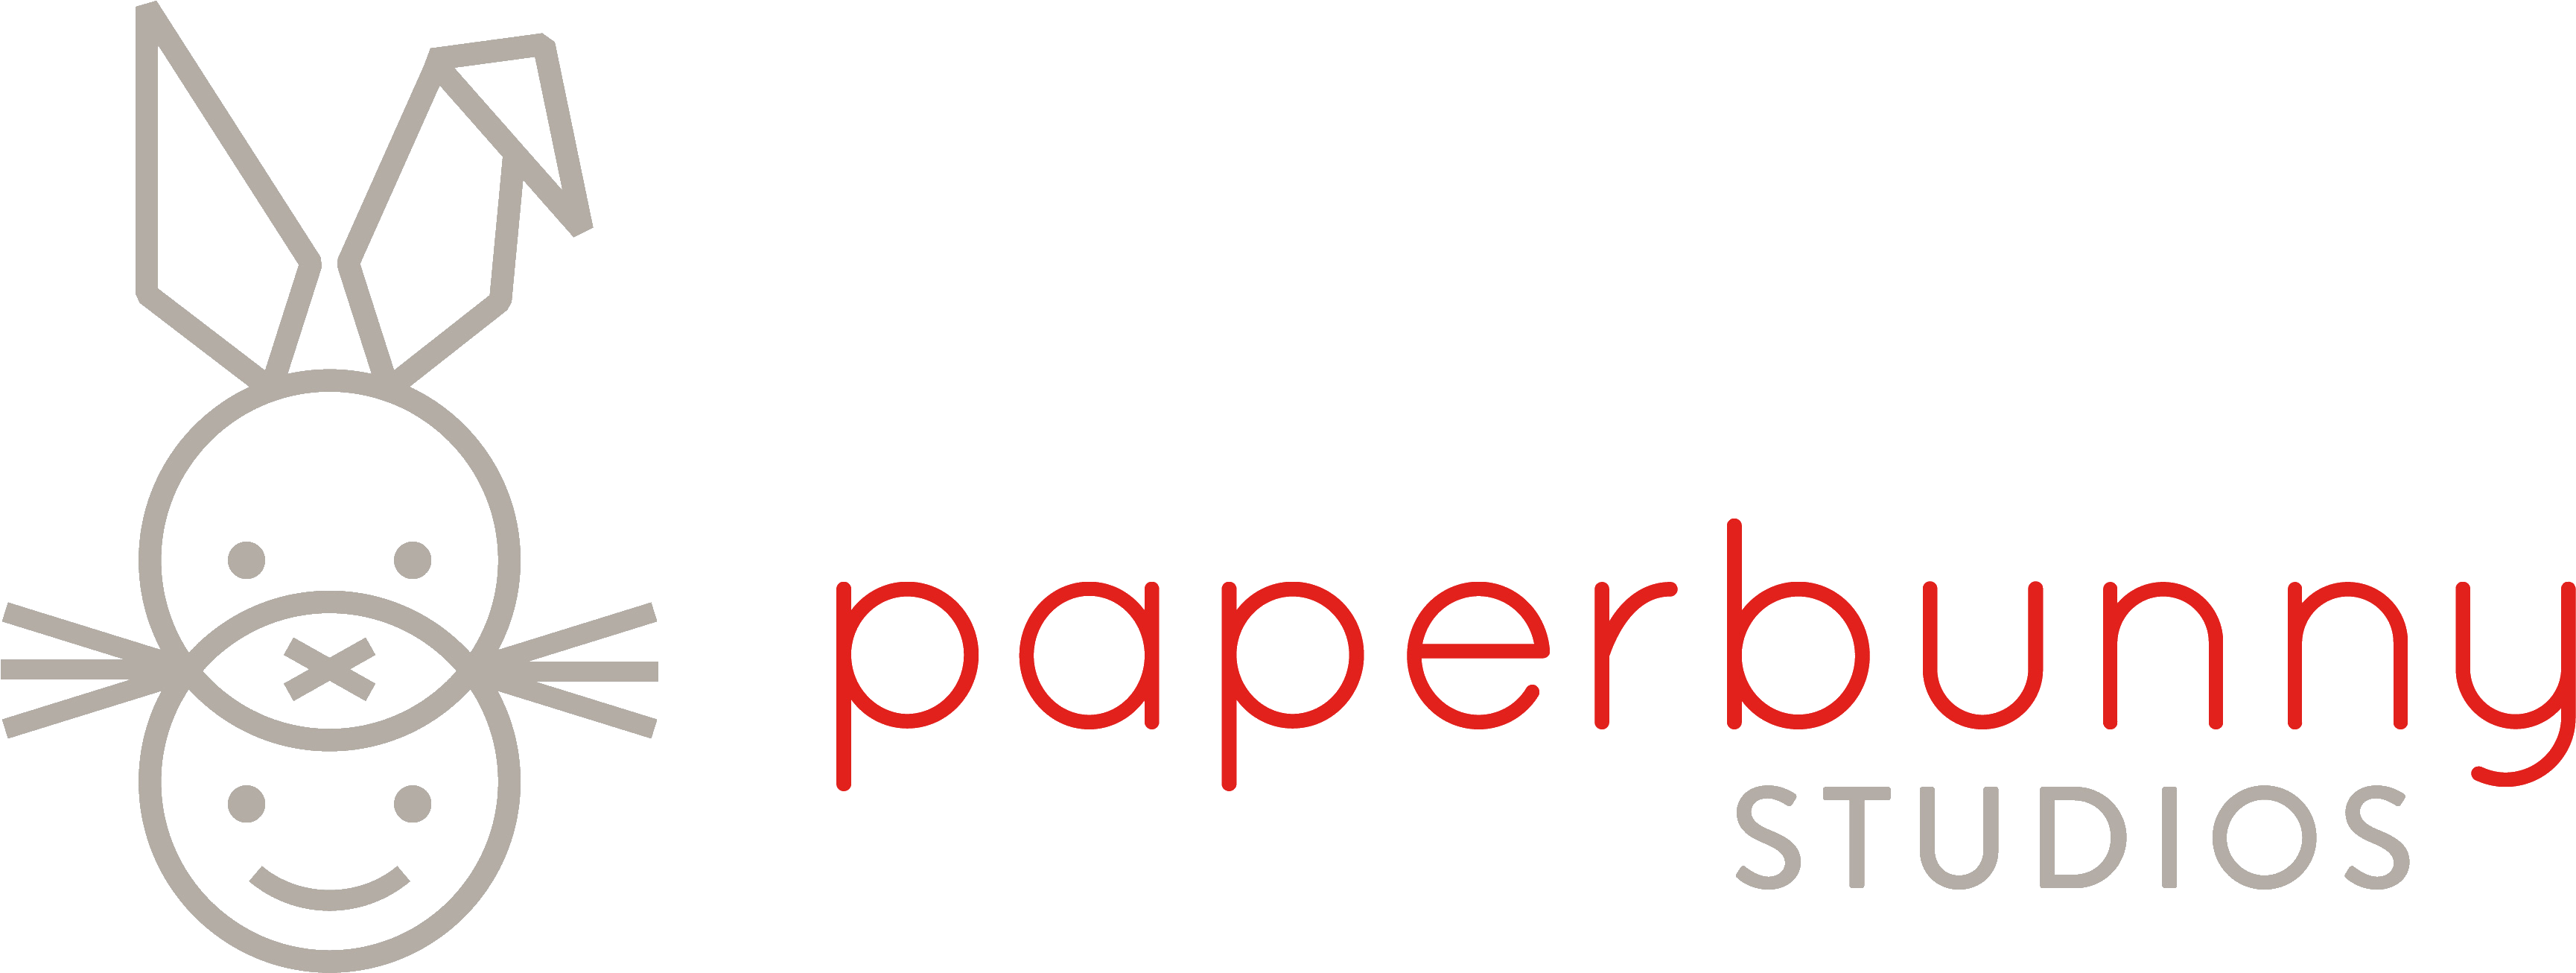 Paperbunny Studios